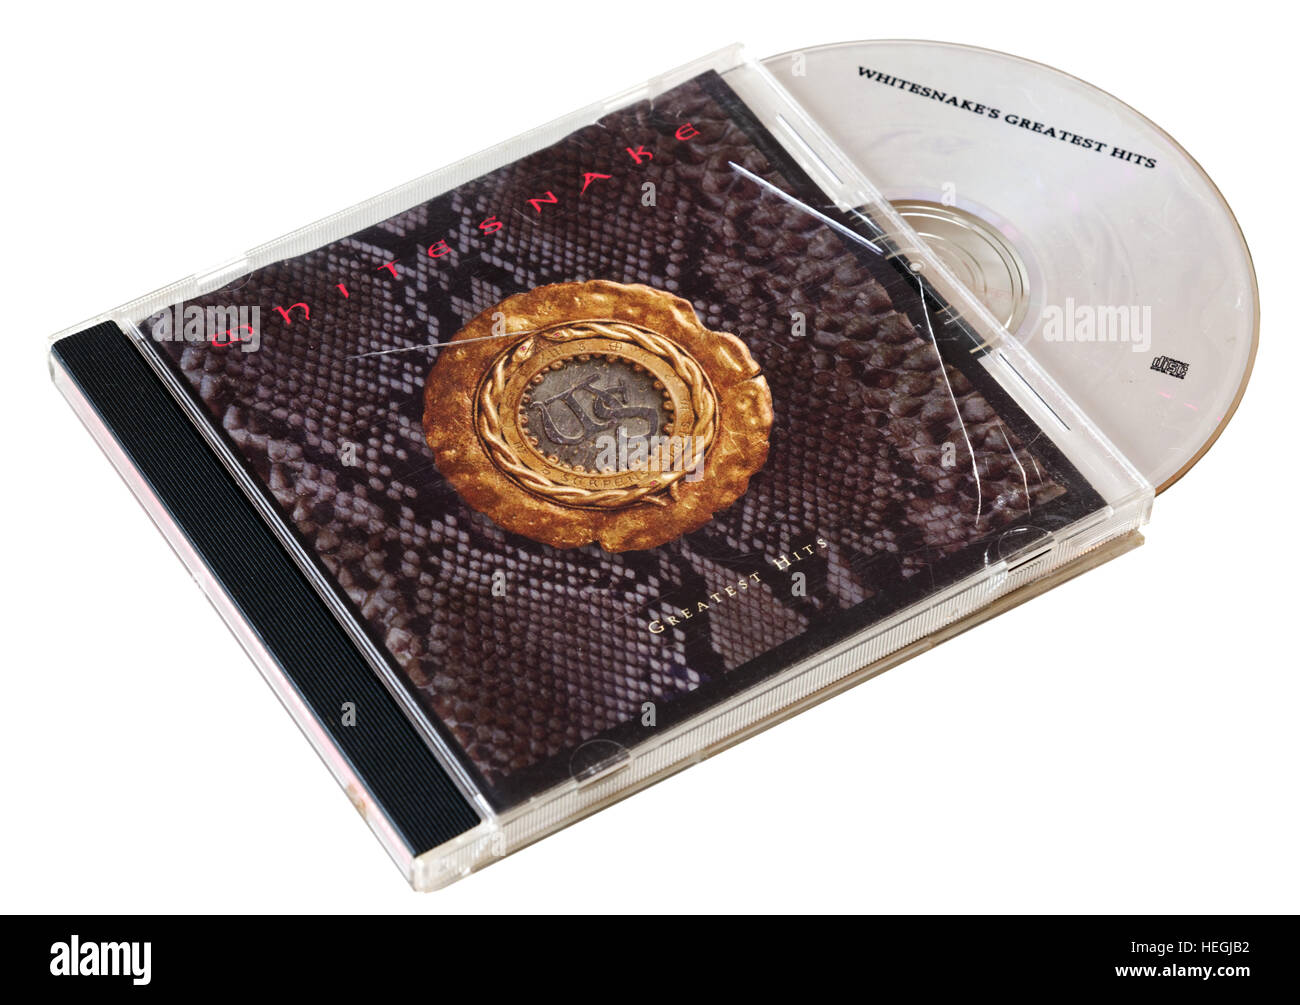 Whitesnake Greatest Hits CD Stock Photo